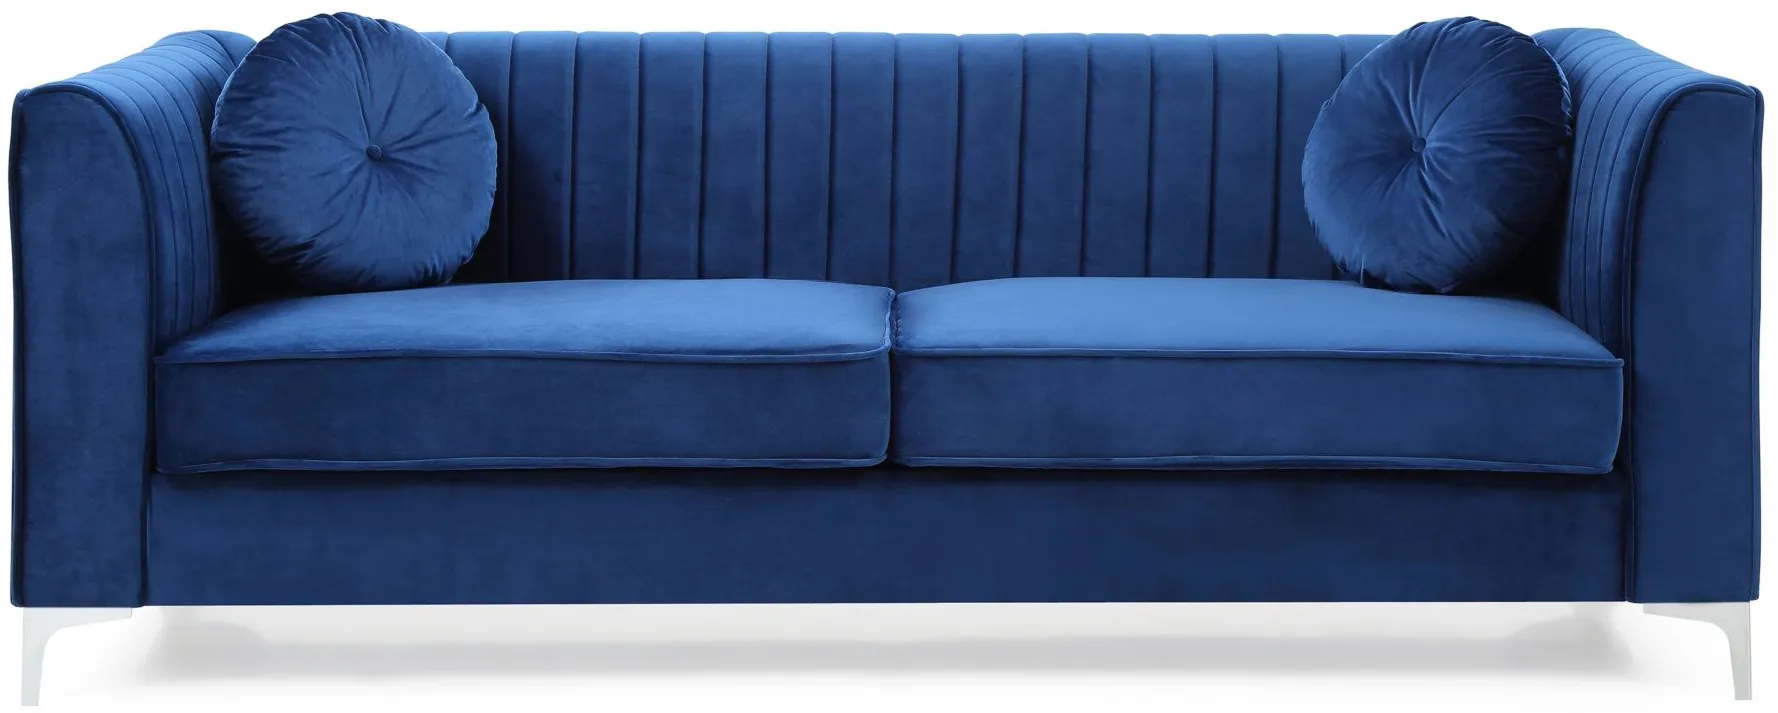 Deltona Sofa in Blue by Glory Furniture